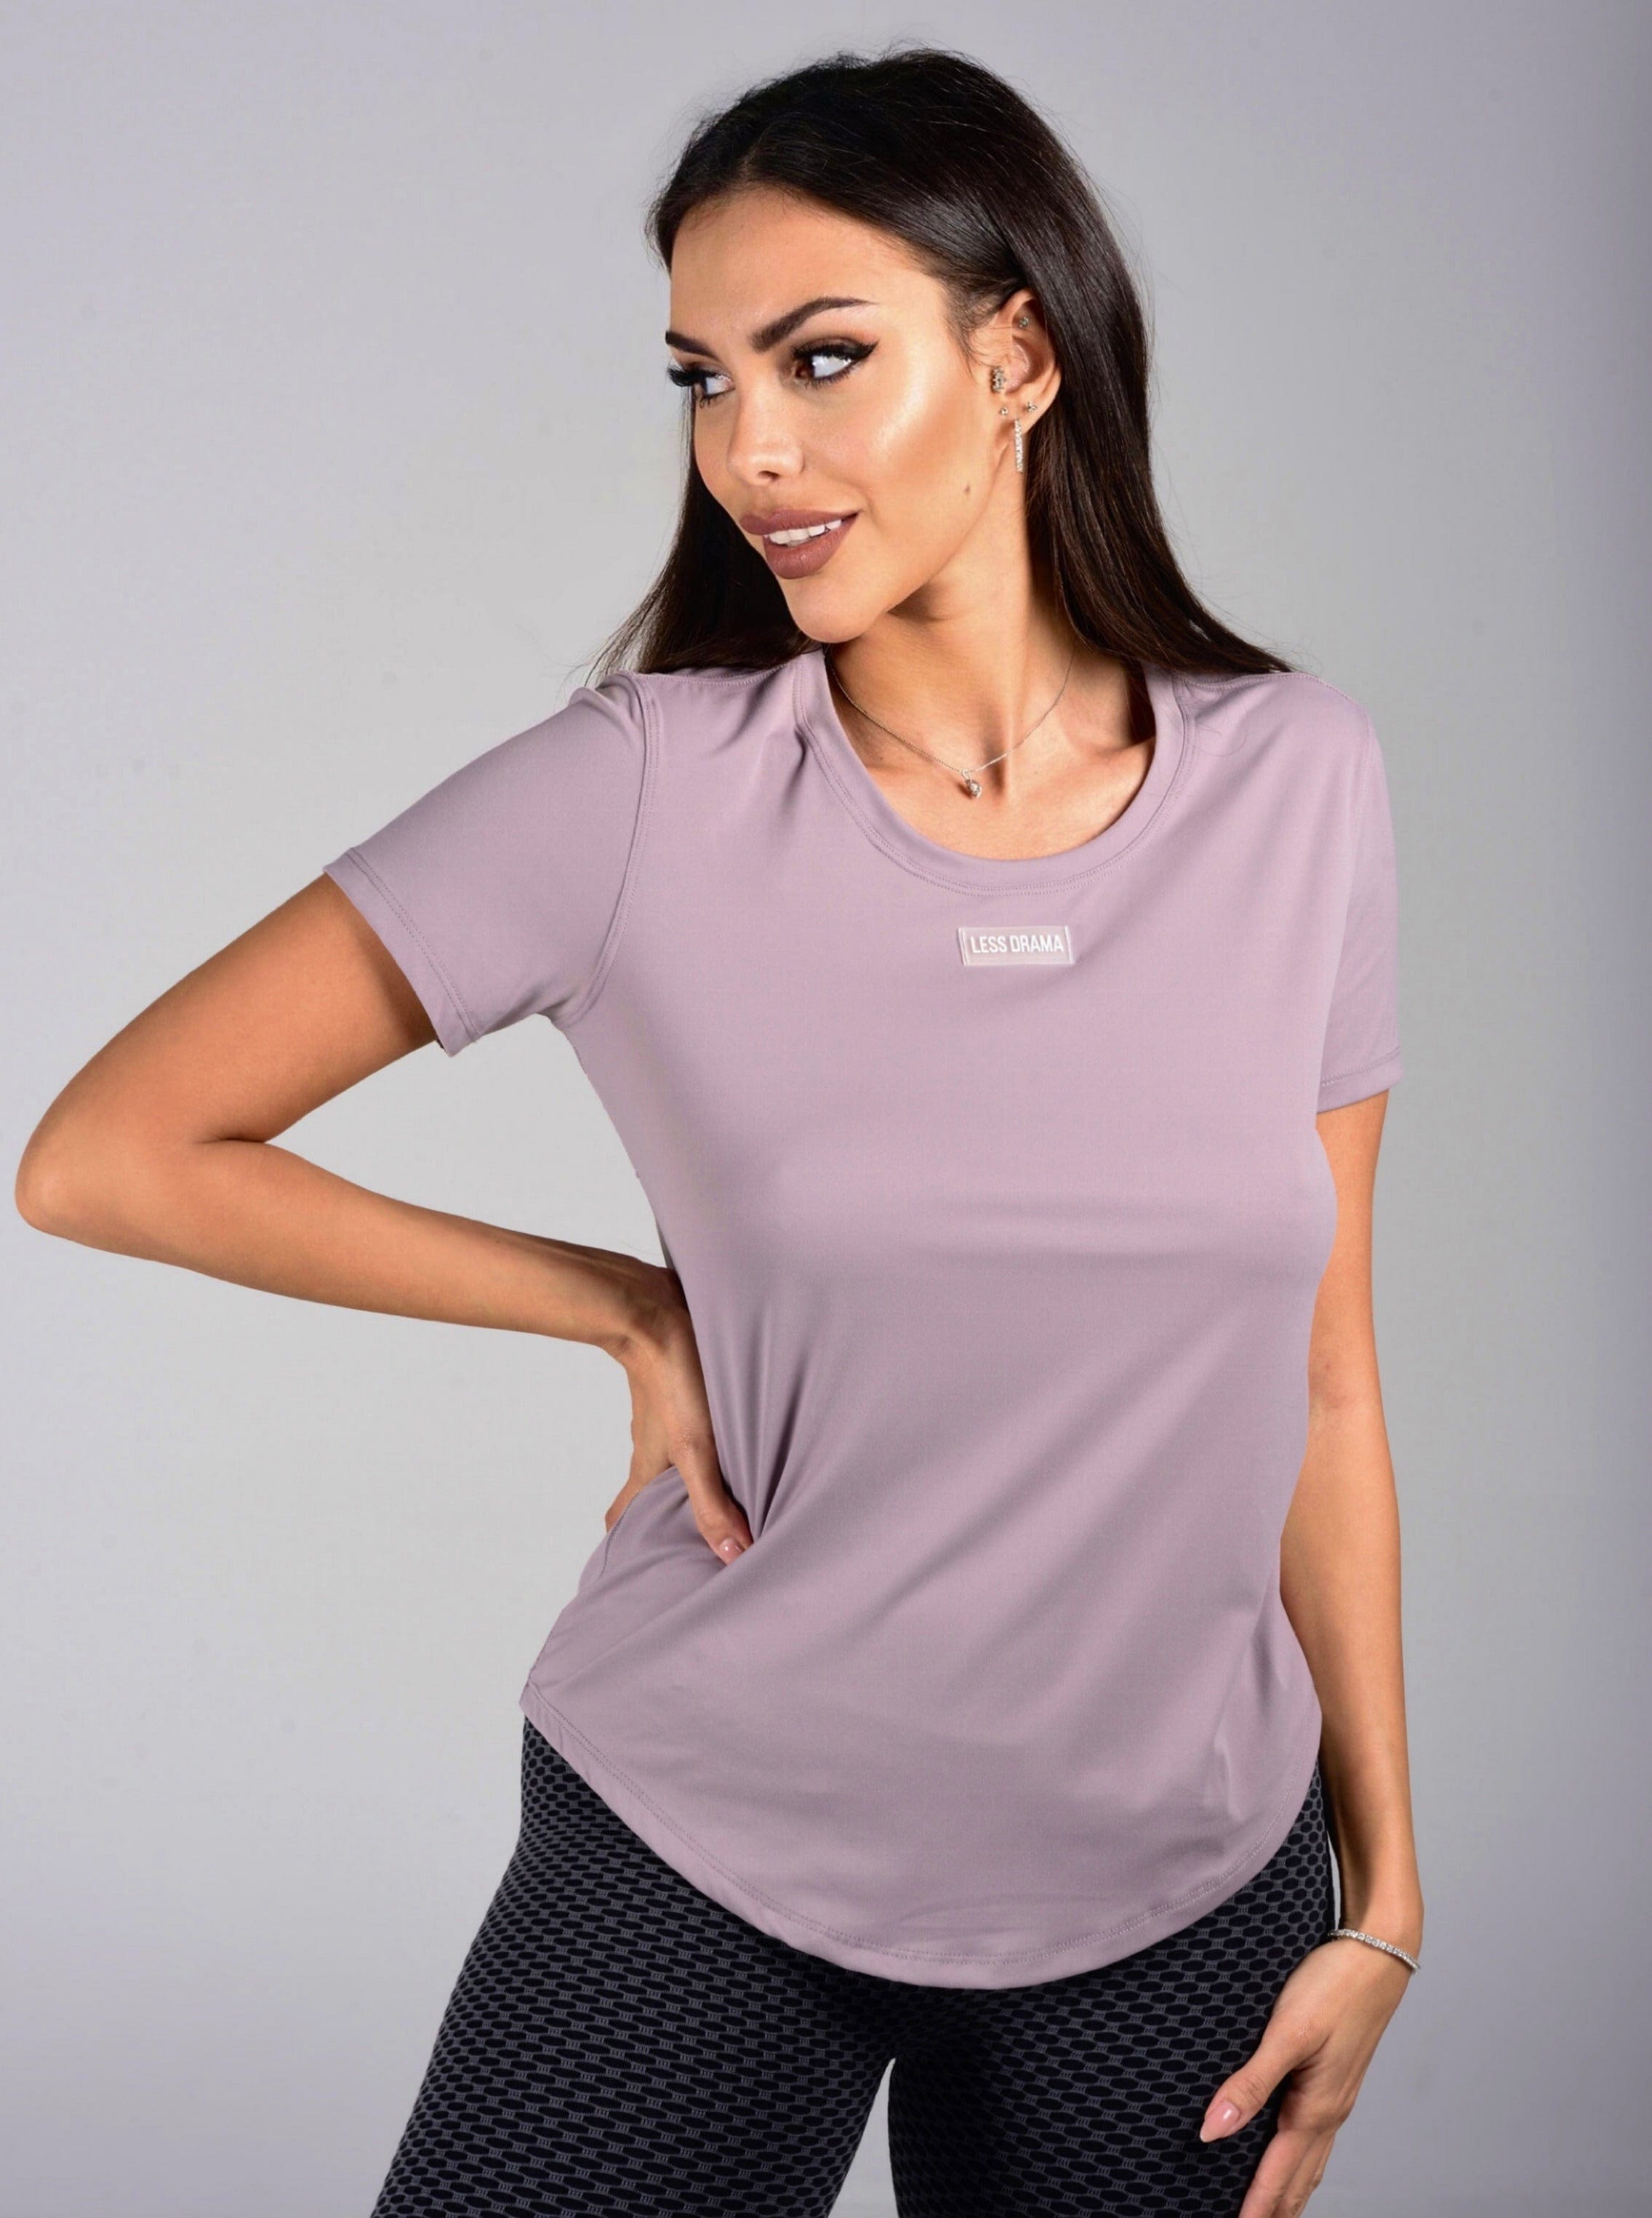 short sleeve purple t shirt women's